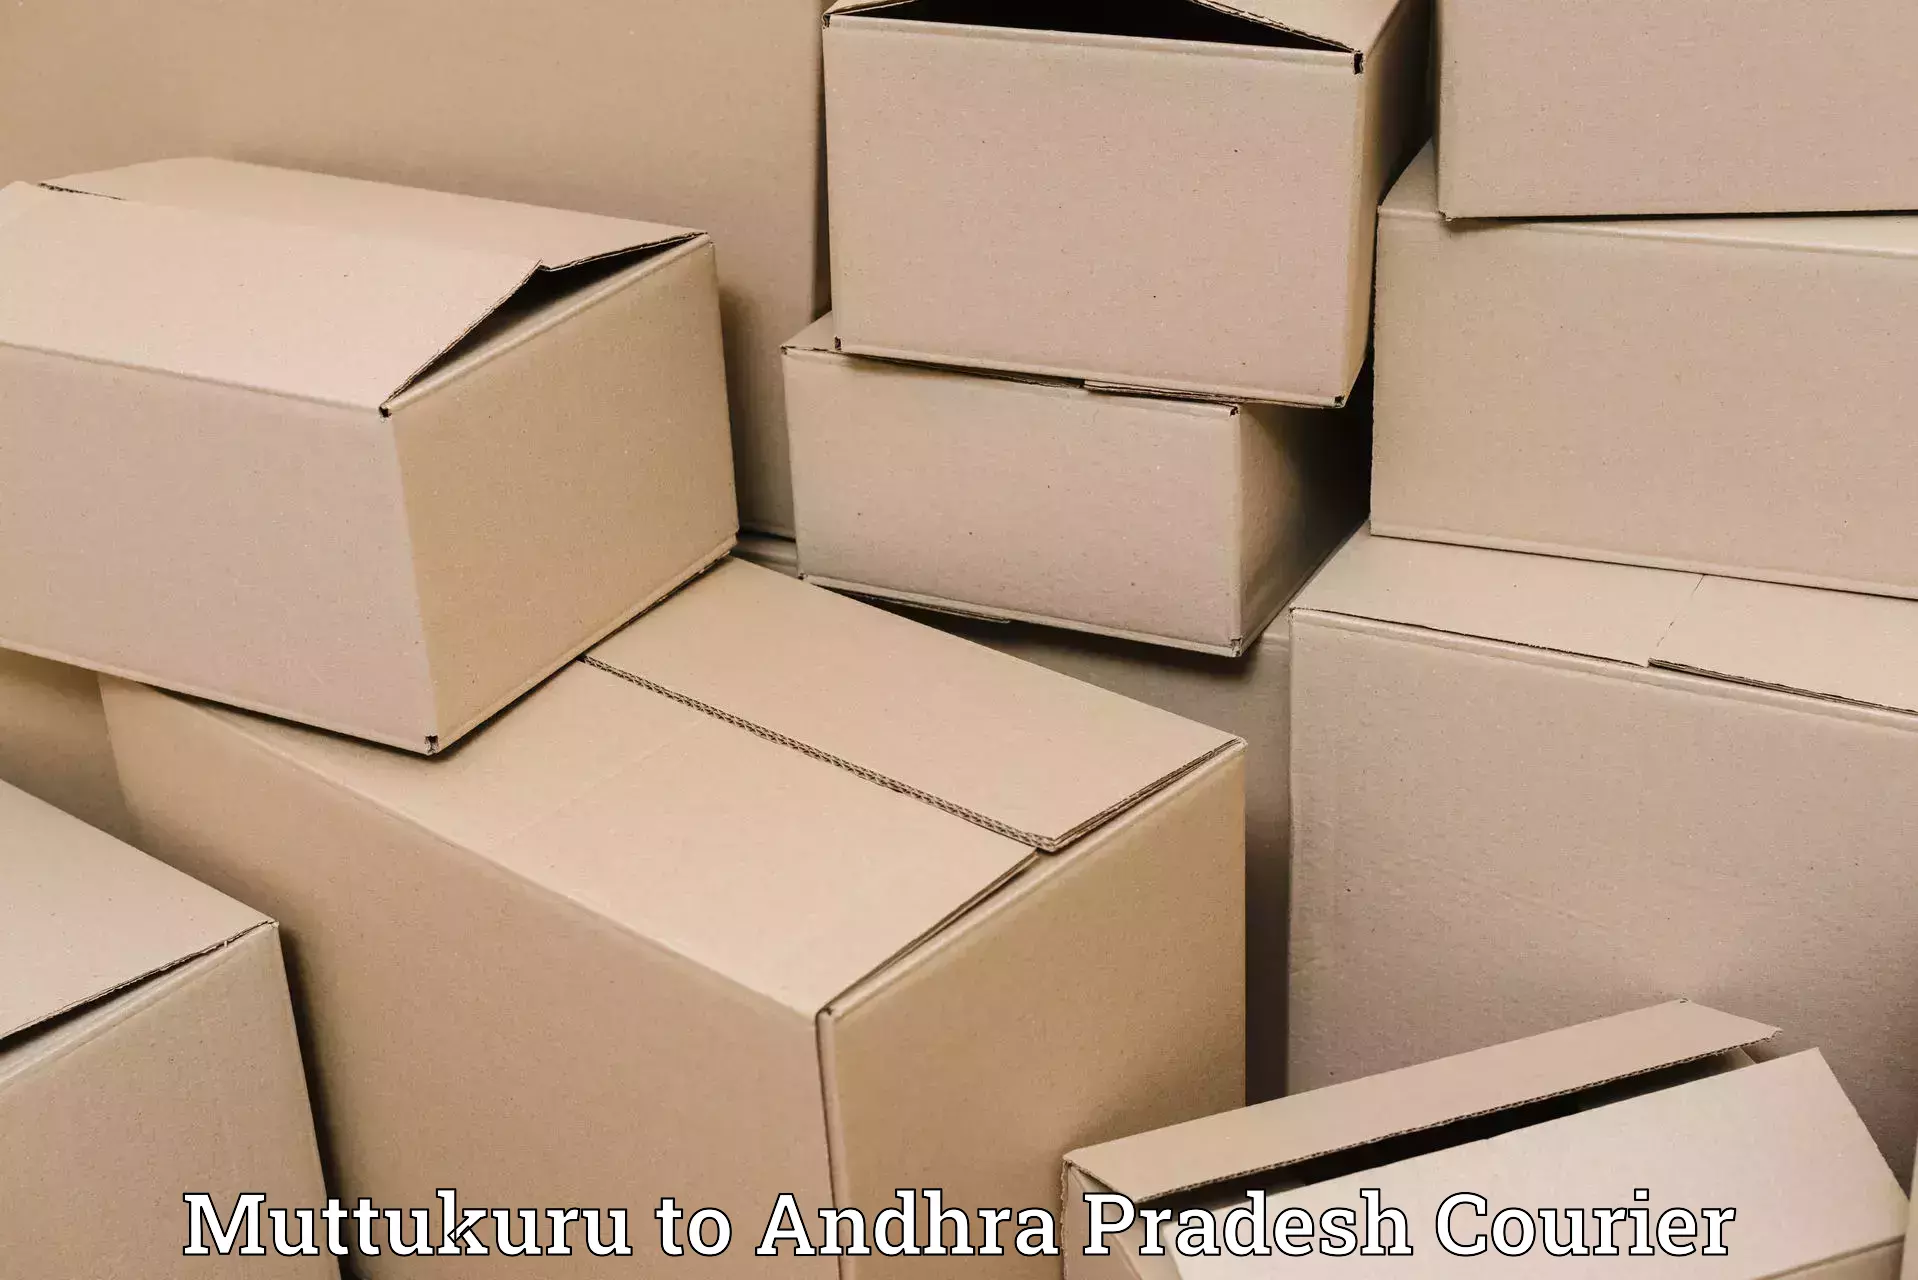 Express logistics service Muttukuru to Pakala